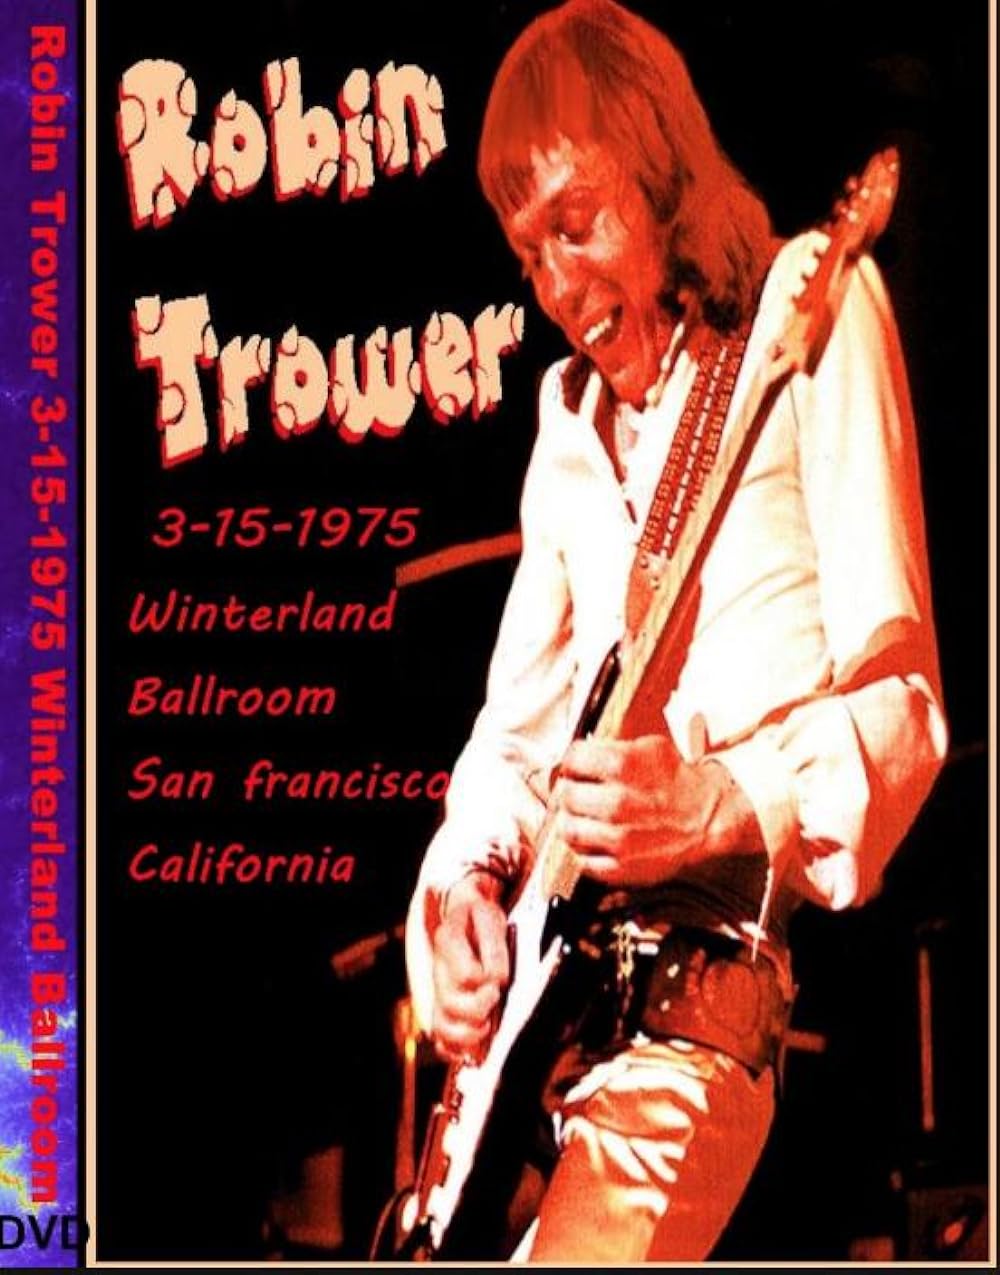 Robin Trower at Winterland - San Fransisco 1975 (DVD5)